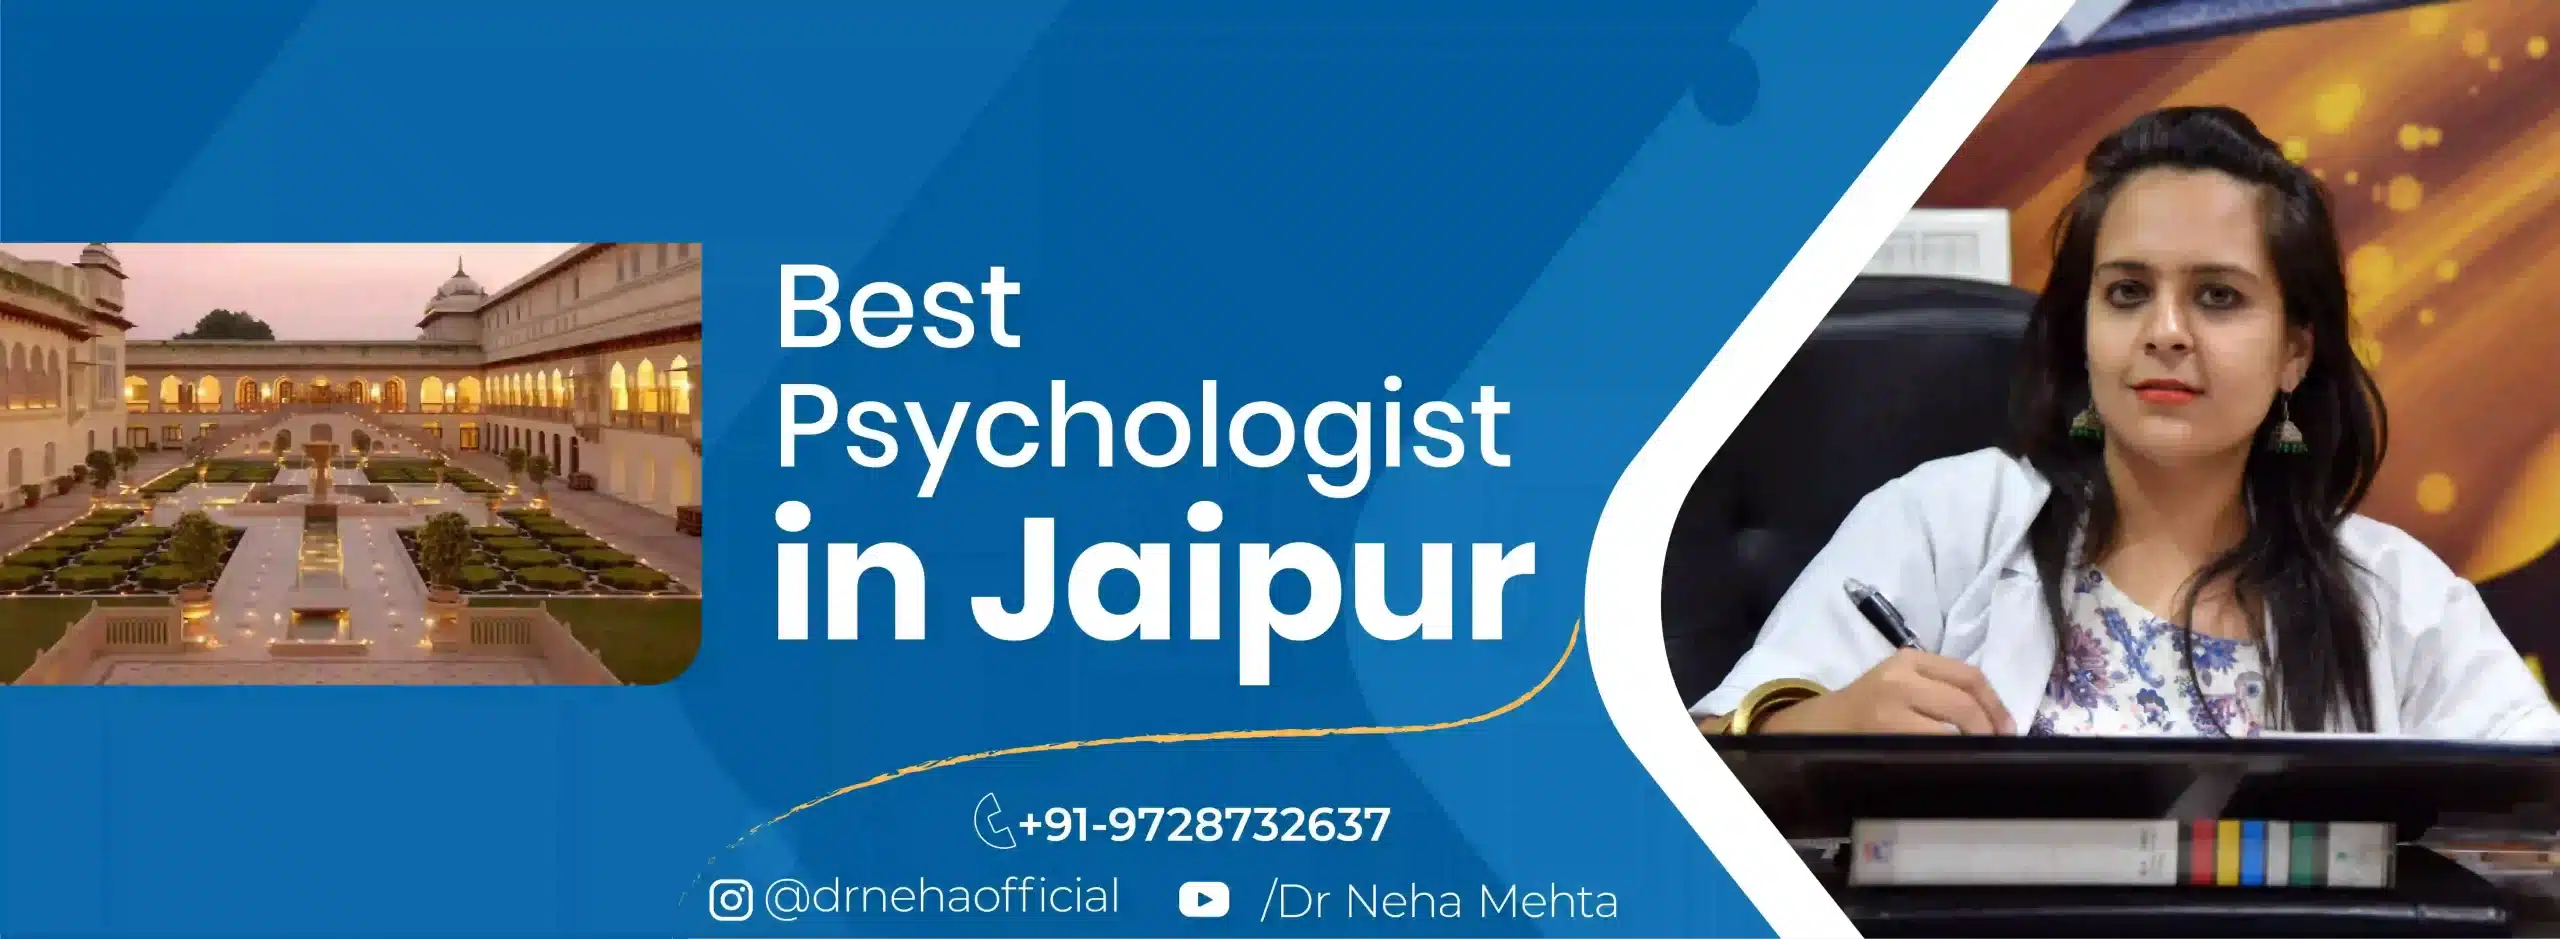 psychologist-in-jaipur